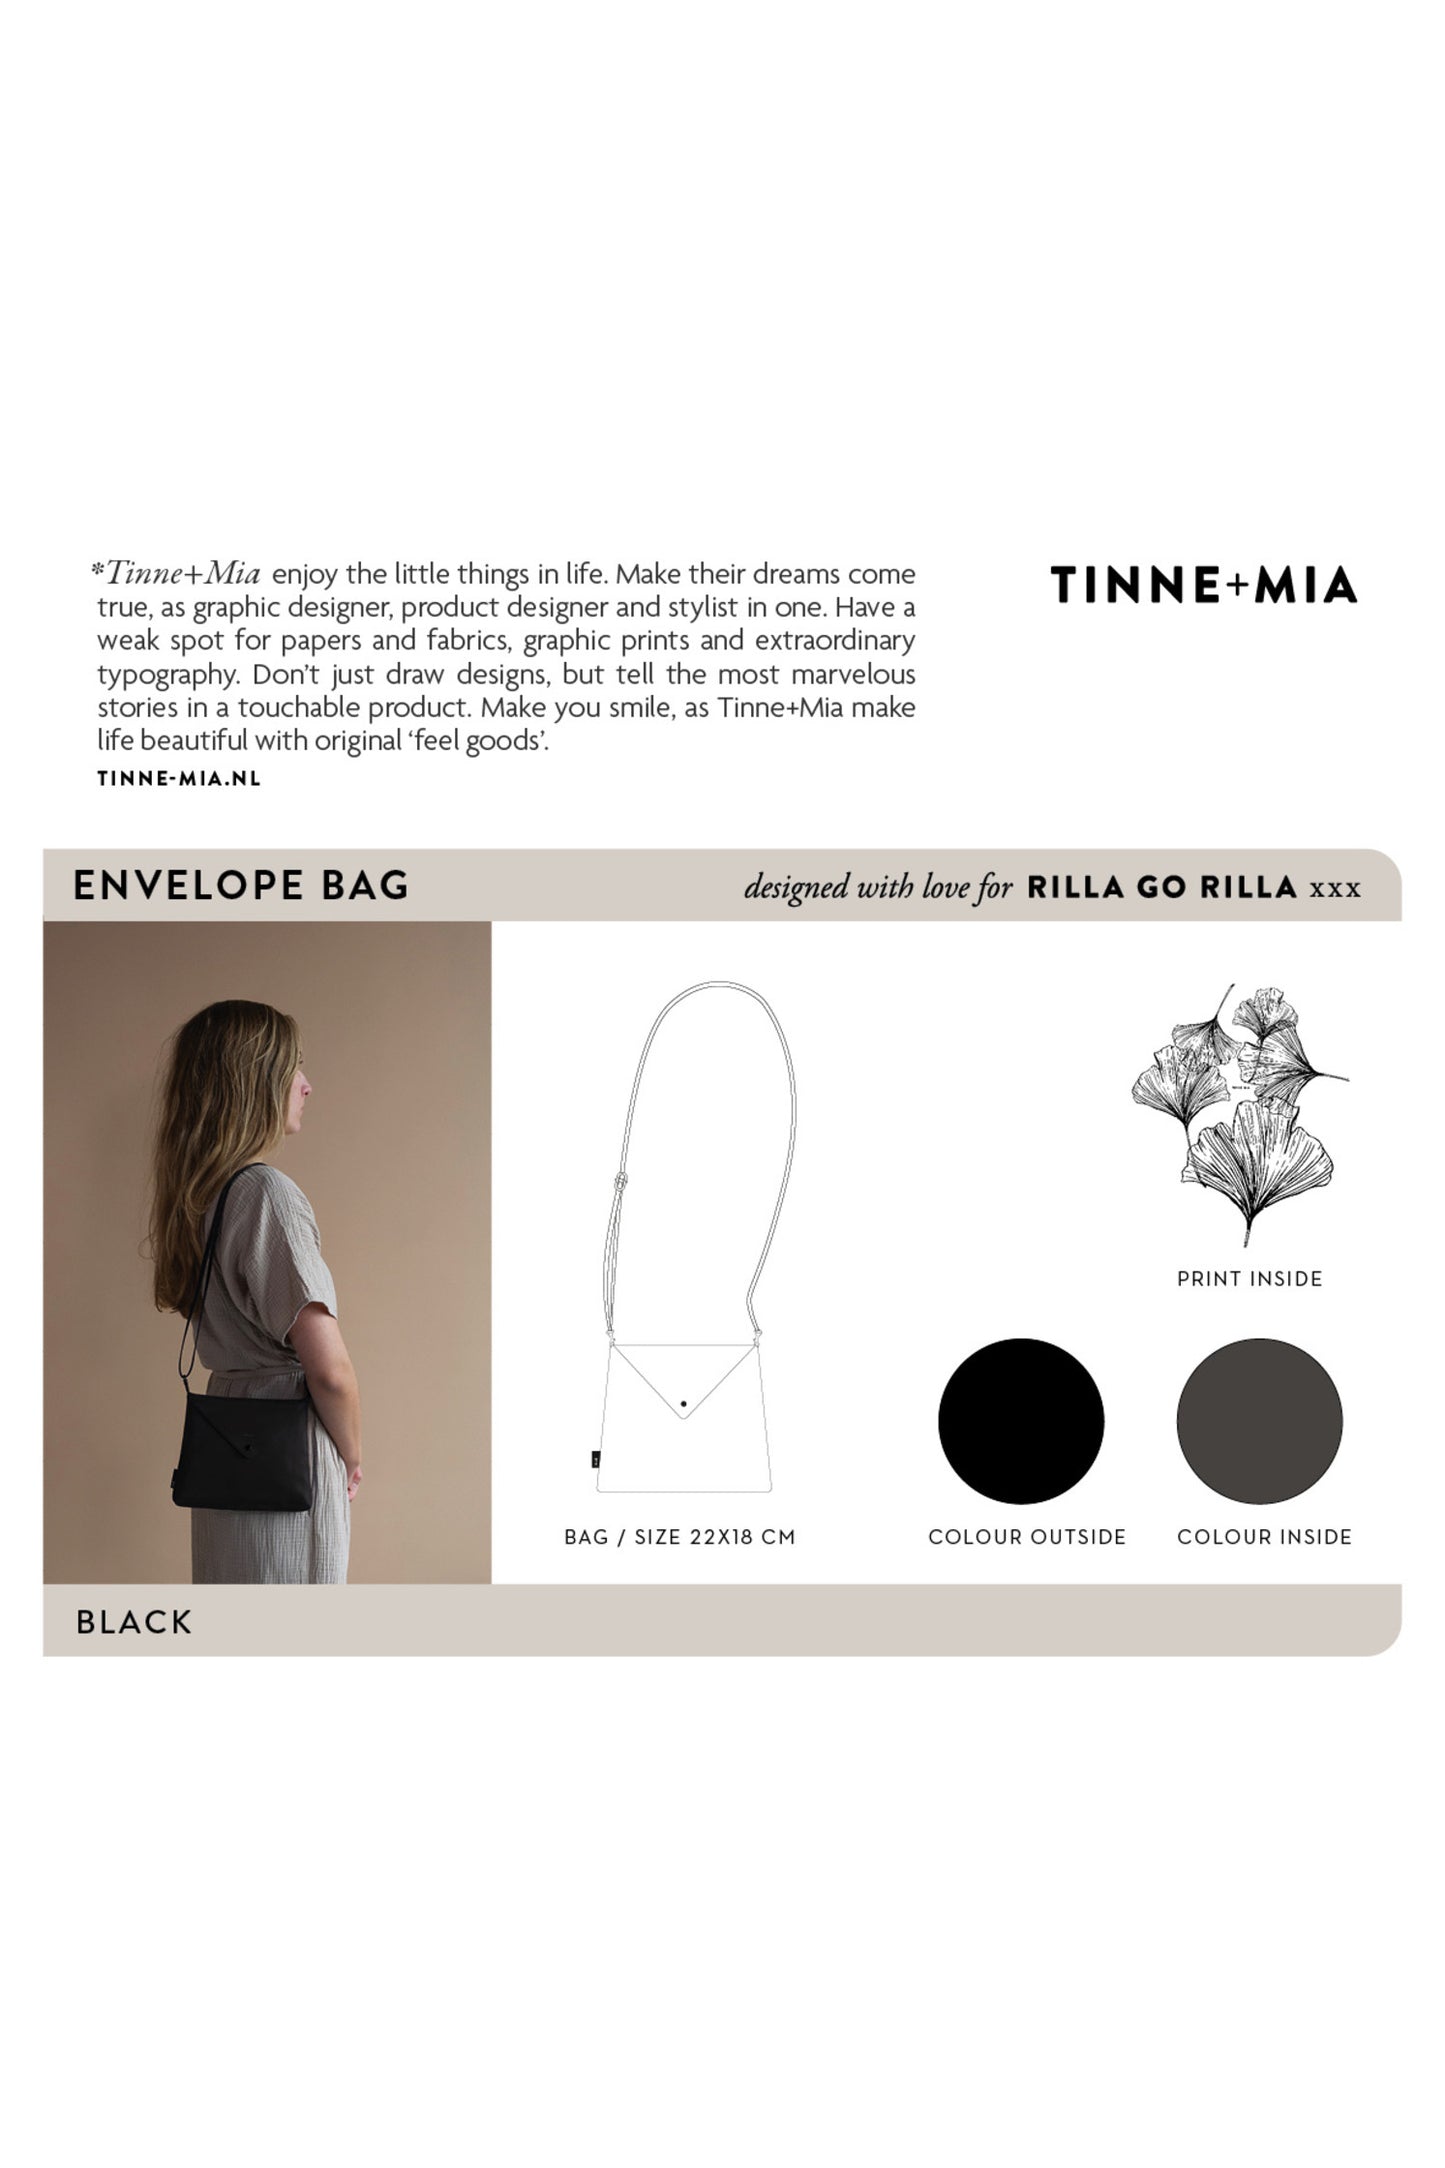 Envelope Bag Black by Tinne + Mia